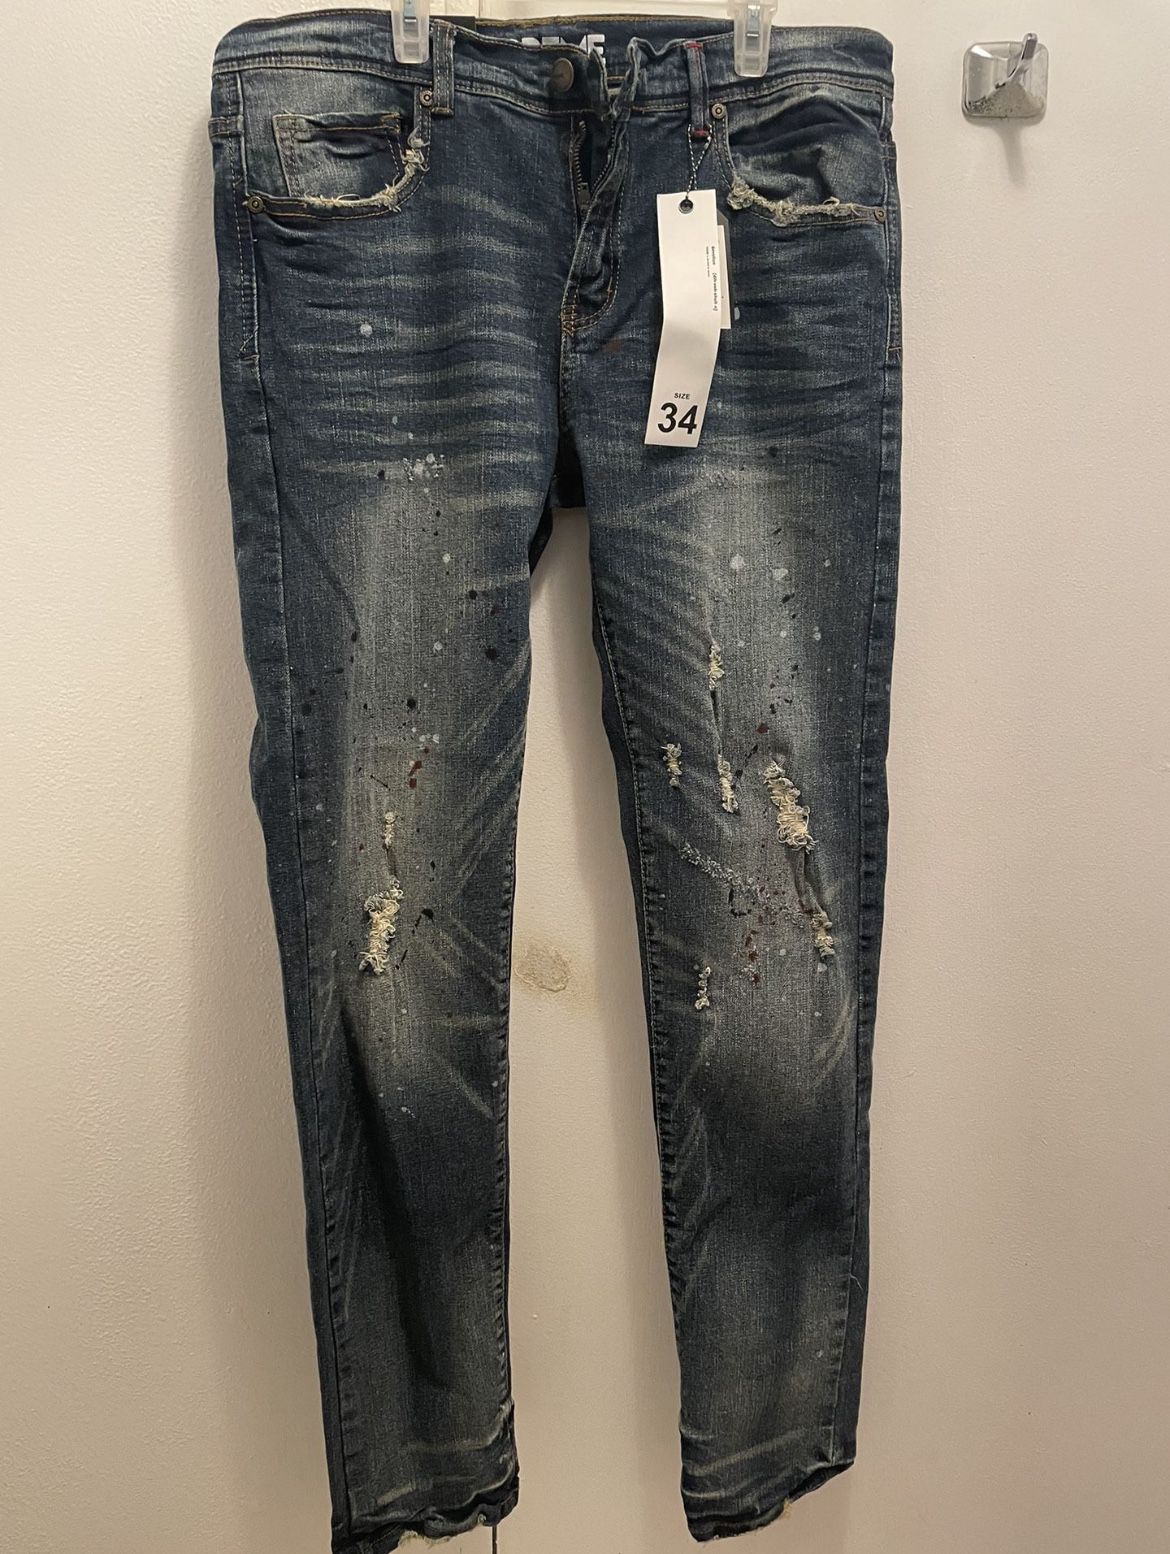 Preme Osaka Indigo Jeans